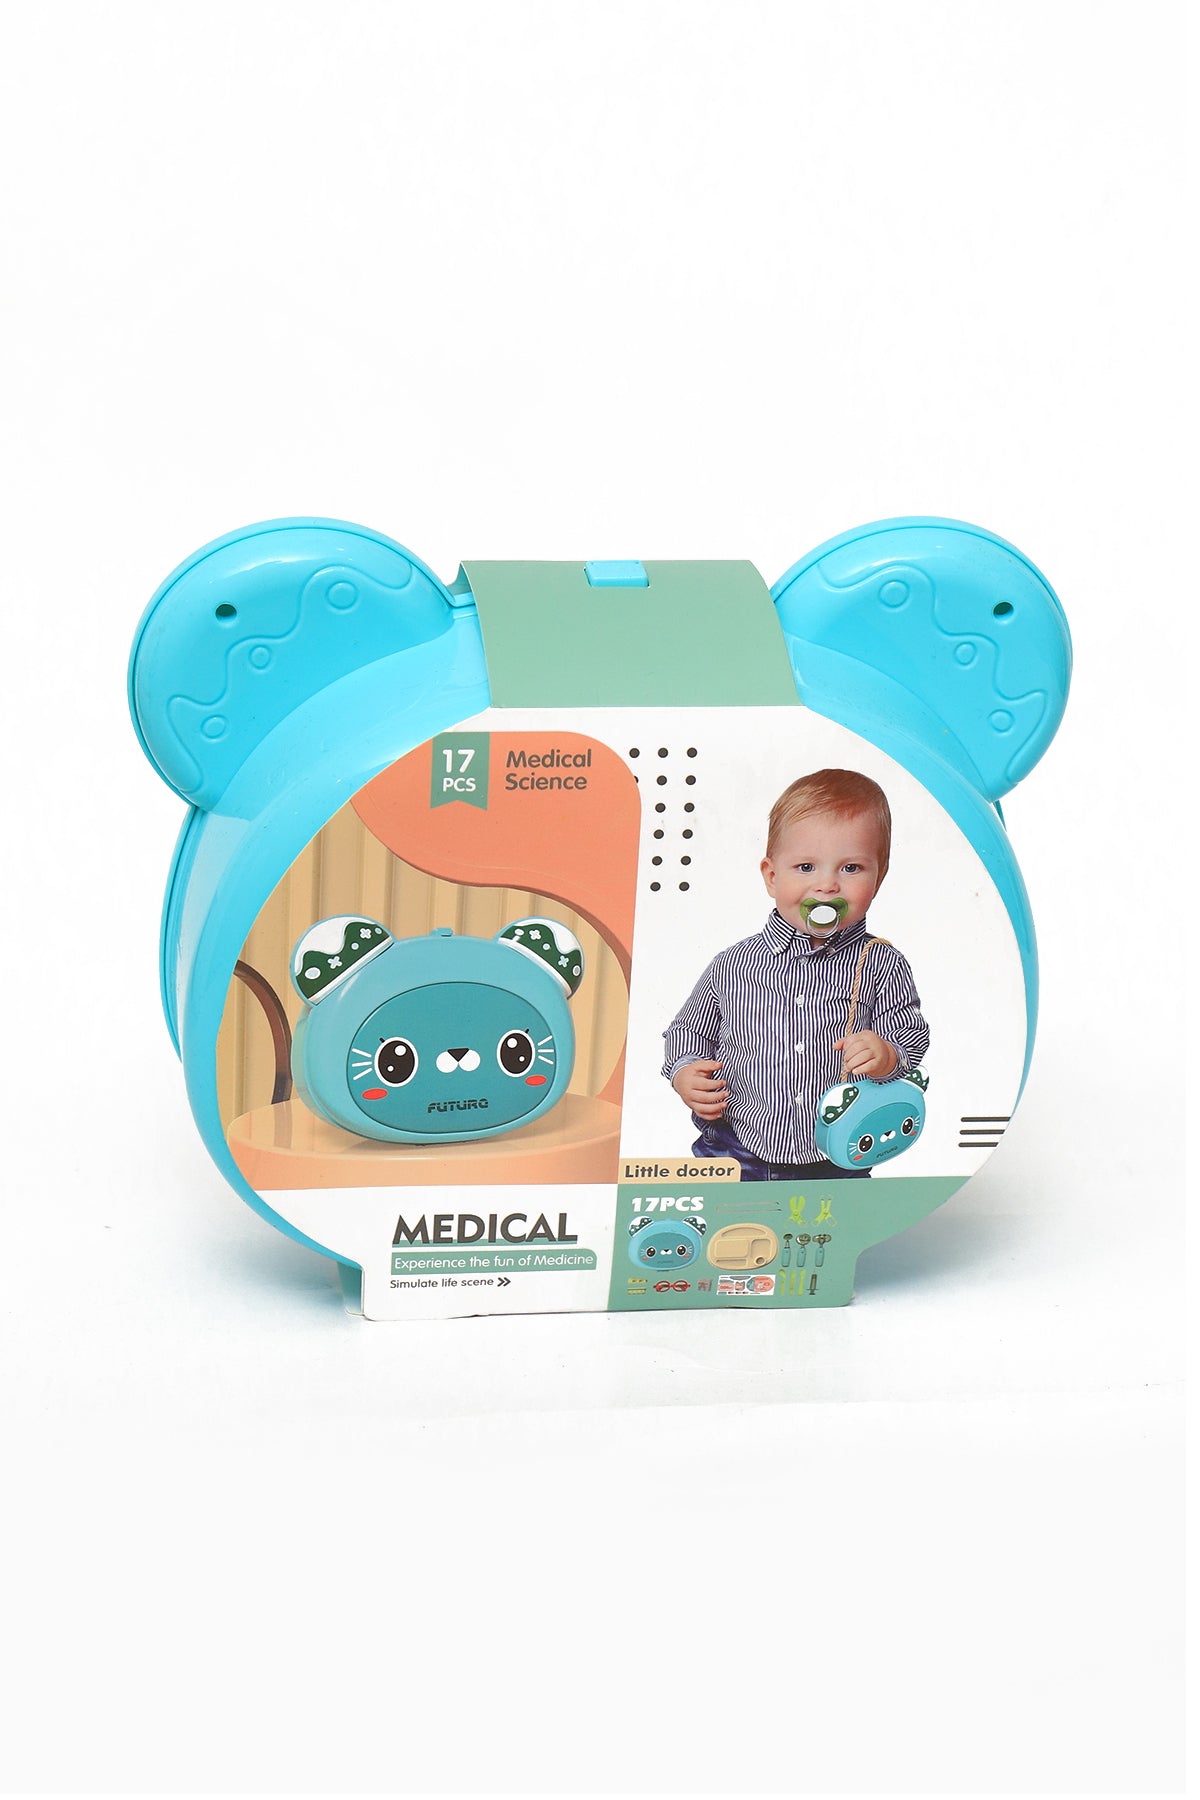 Doctor Tool Box Play Set For Kids